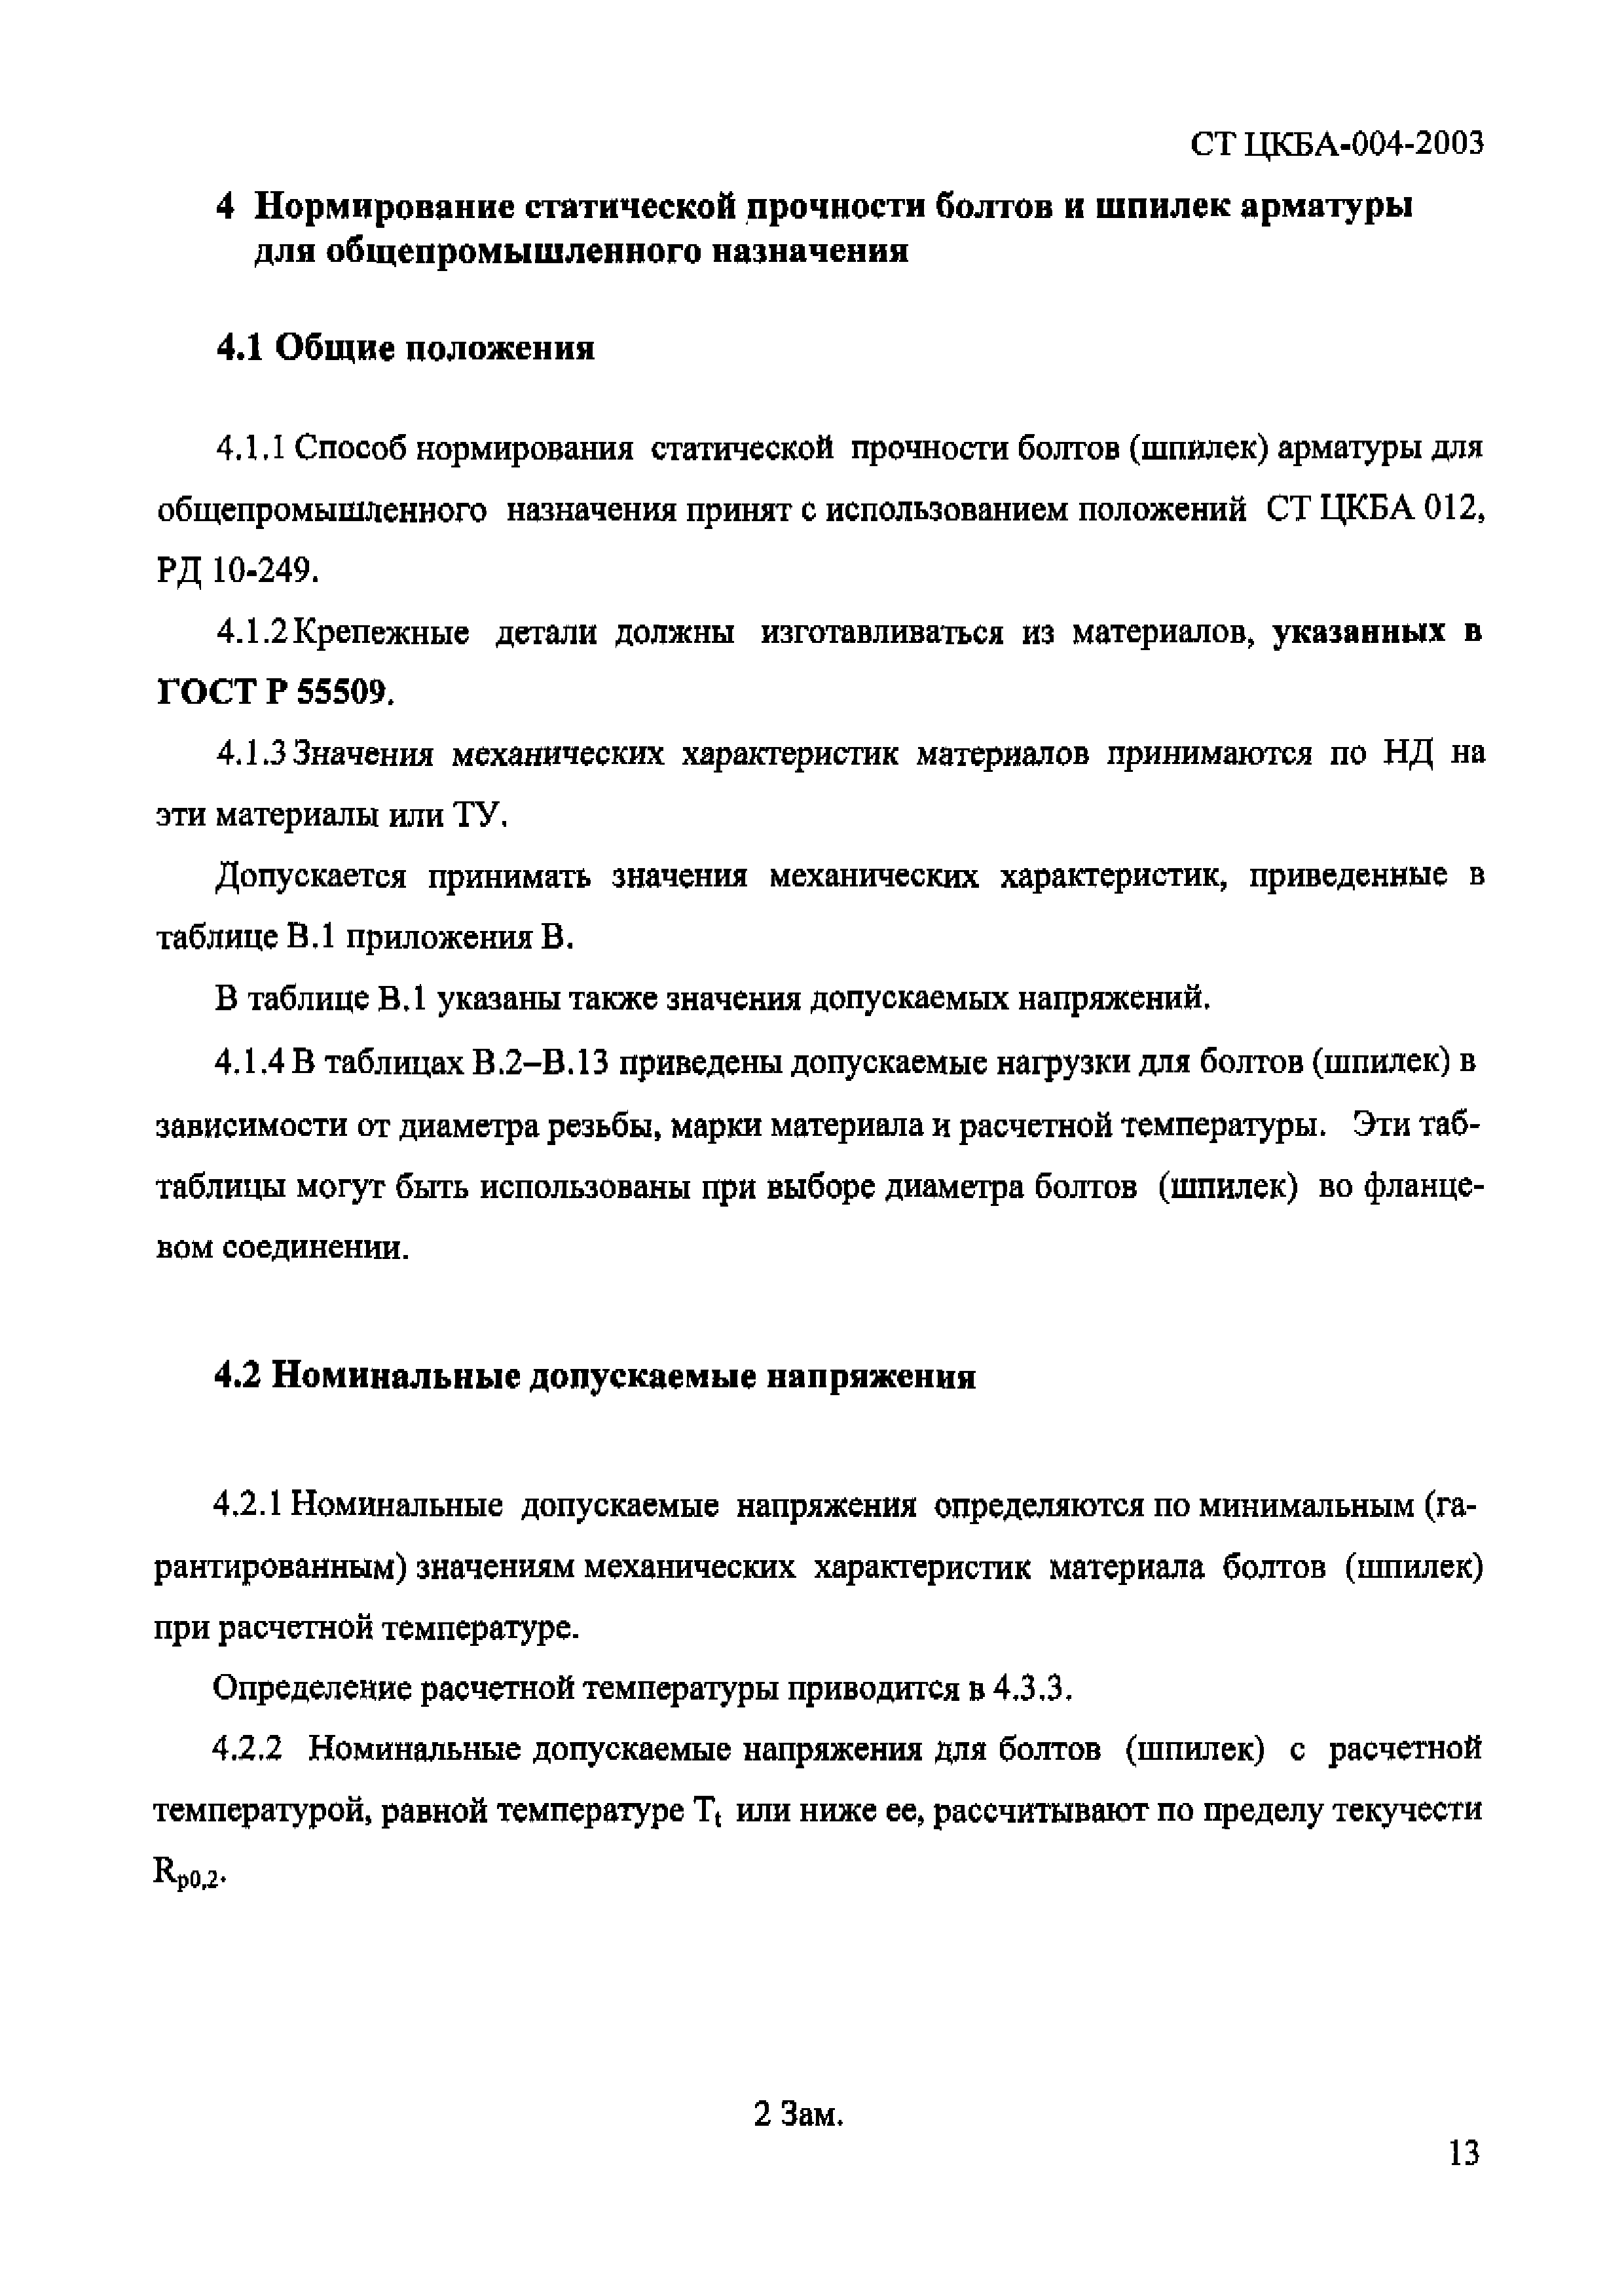 СТ ЦКБА 004-2003